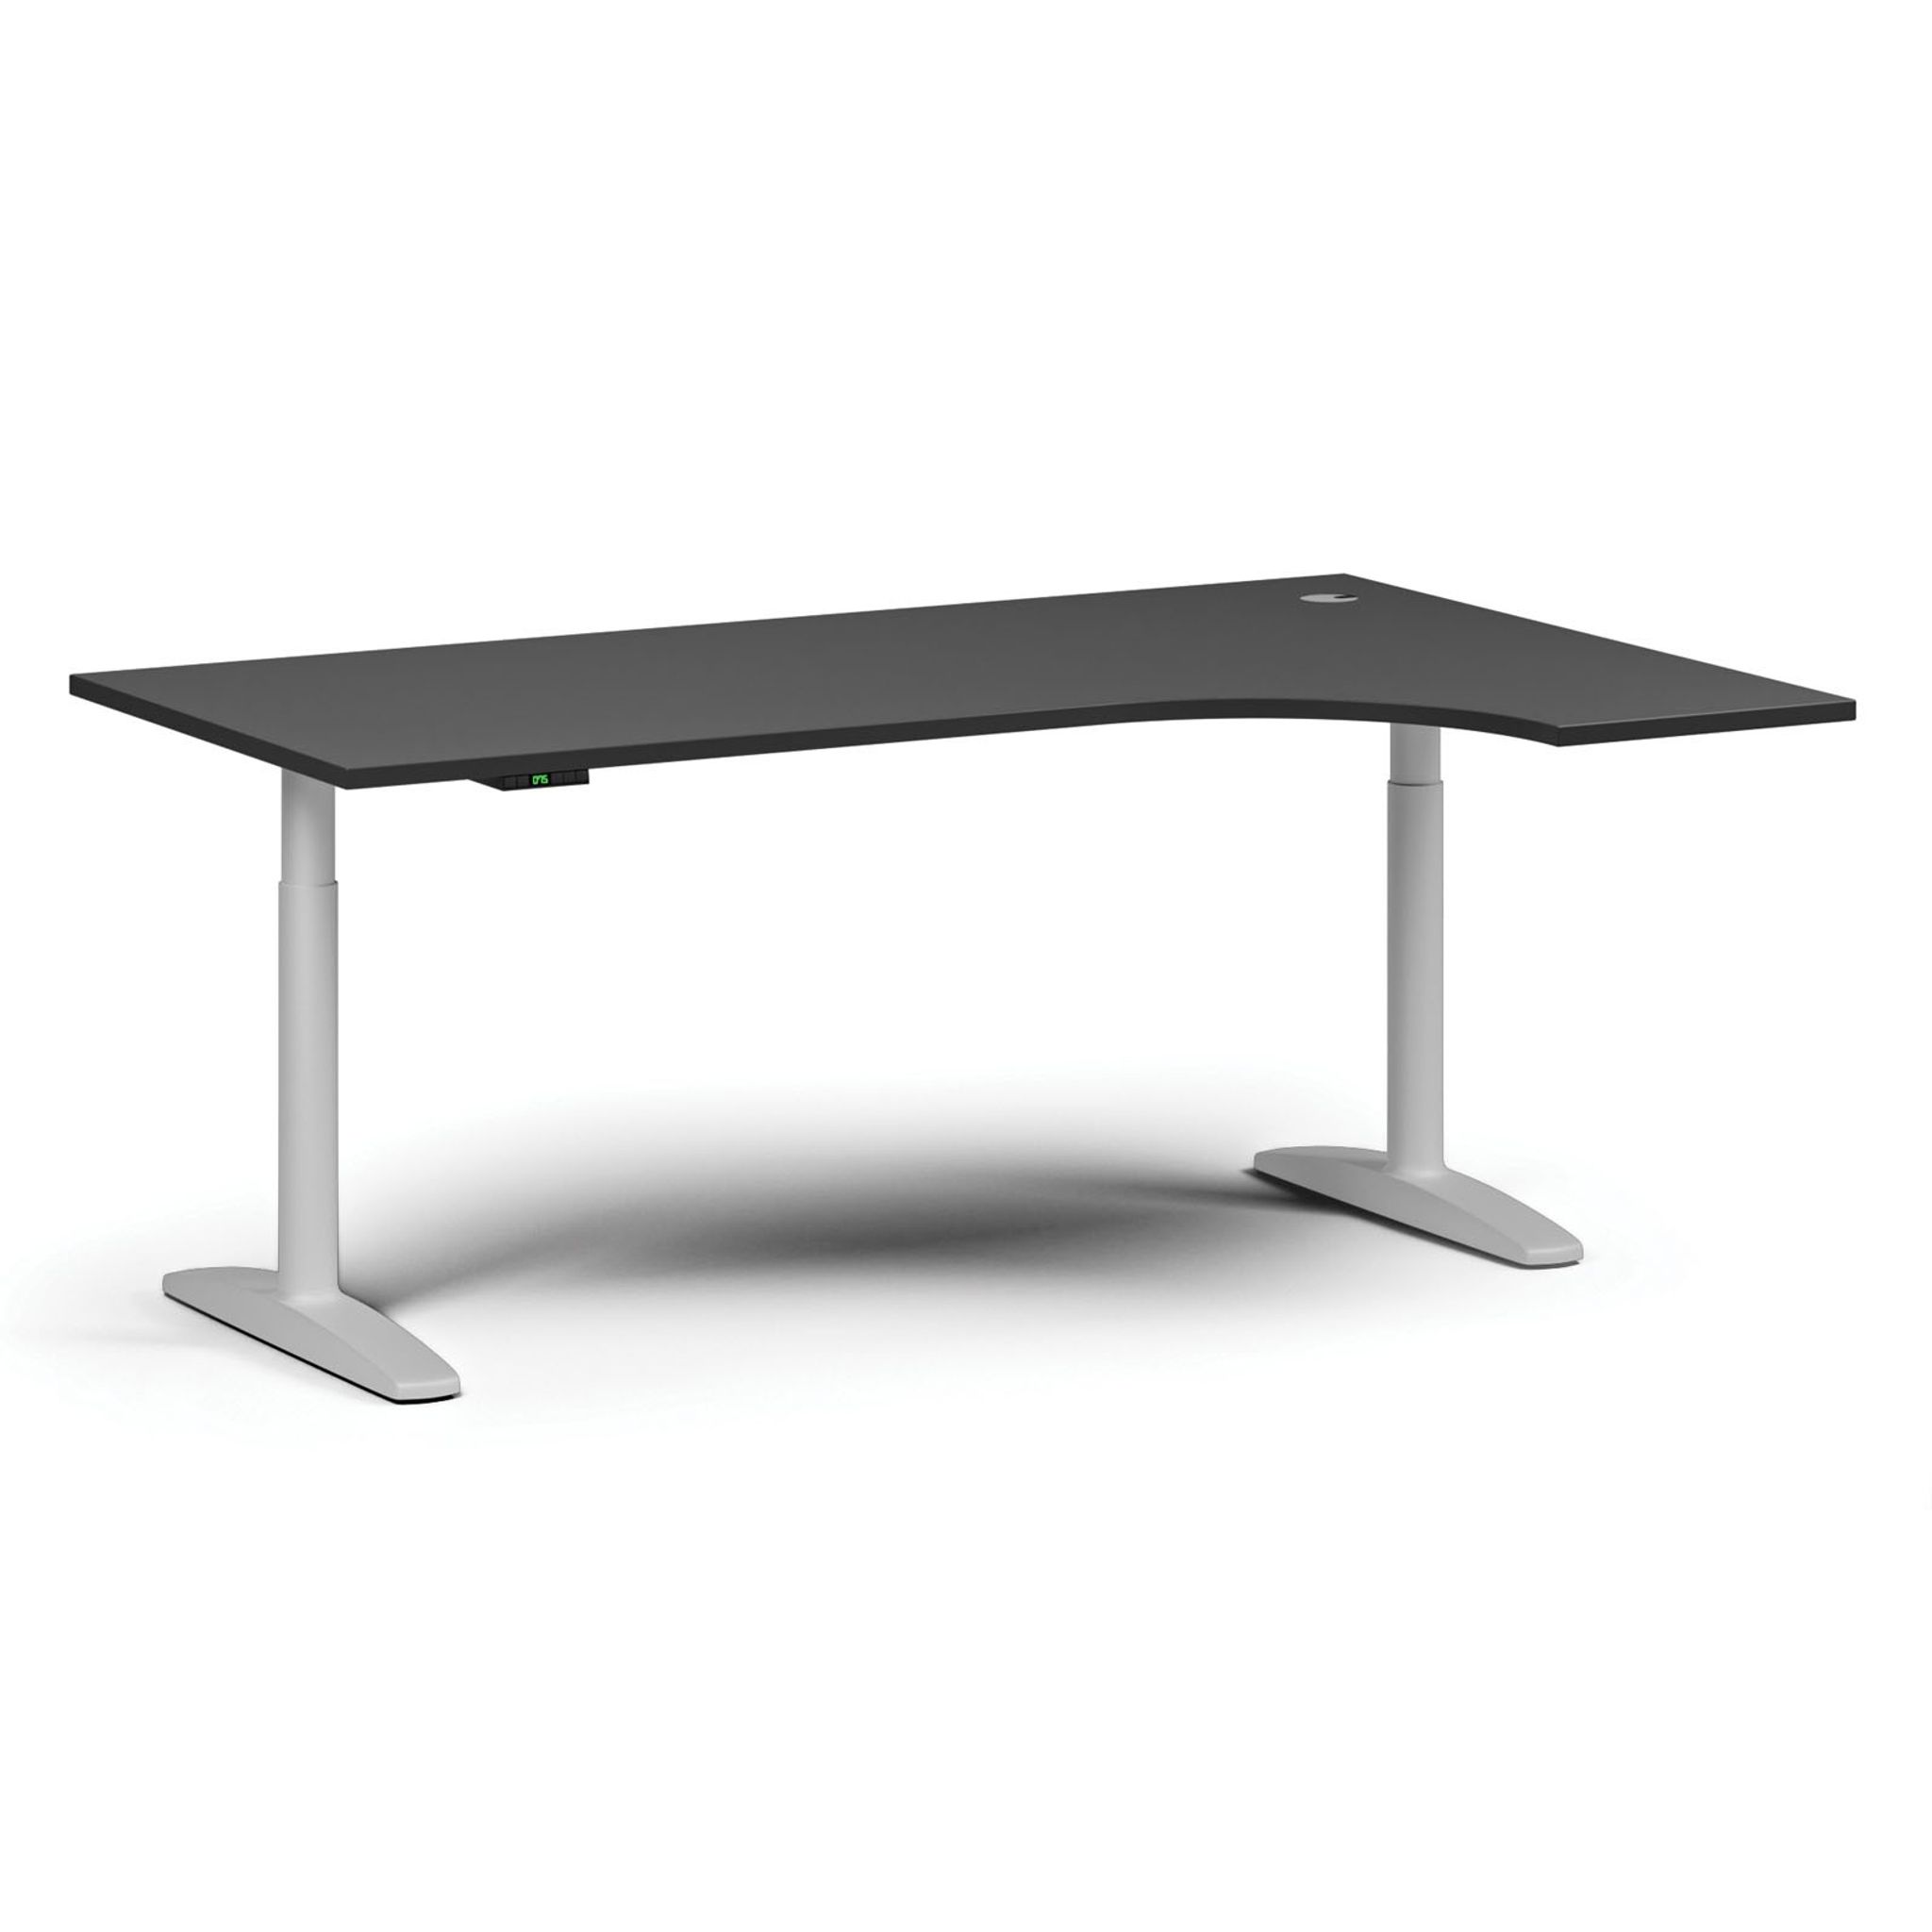 Výškově nastavitelný stůl OBOL, elektrický, 675-1325 mm, rohový pravý, deska 1800x1200 mm, bílá zaoblená podnož, grafit